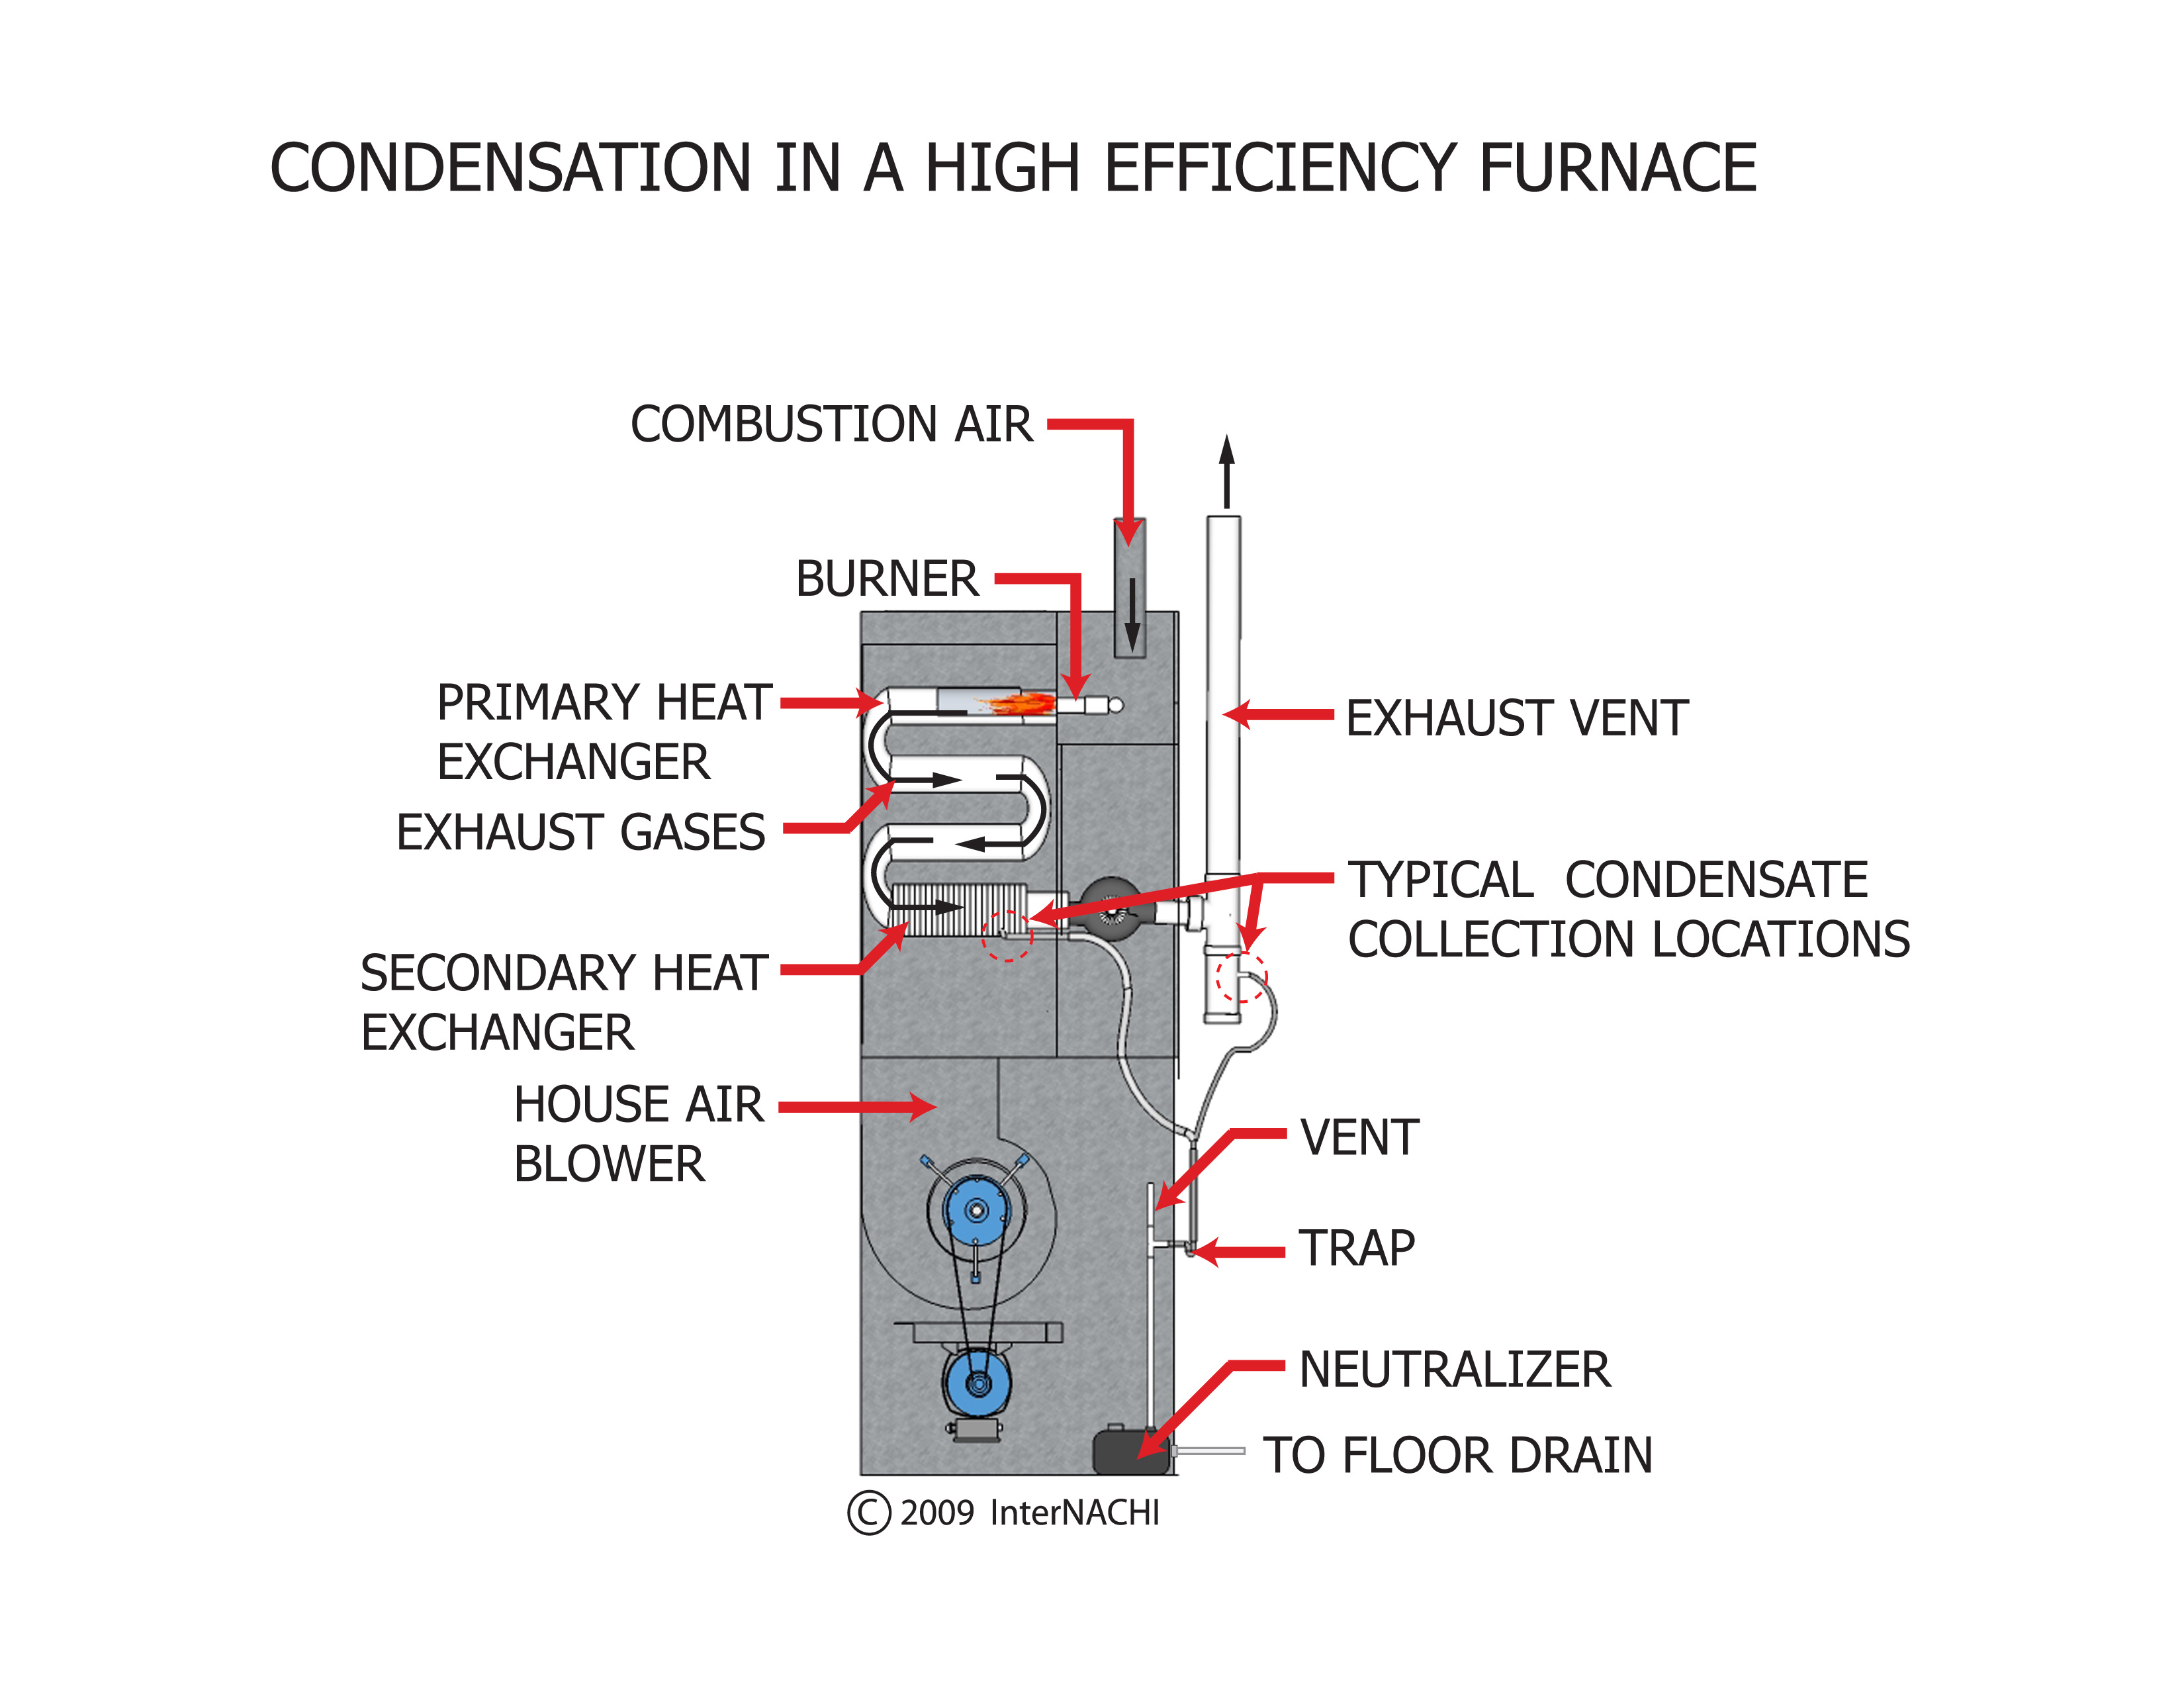 High Efficiency Furnace Venting Diagram Condensation In A High Efficiency Furnace Inspection Gallery